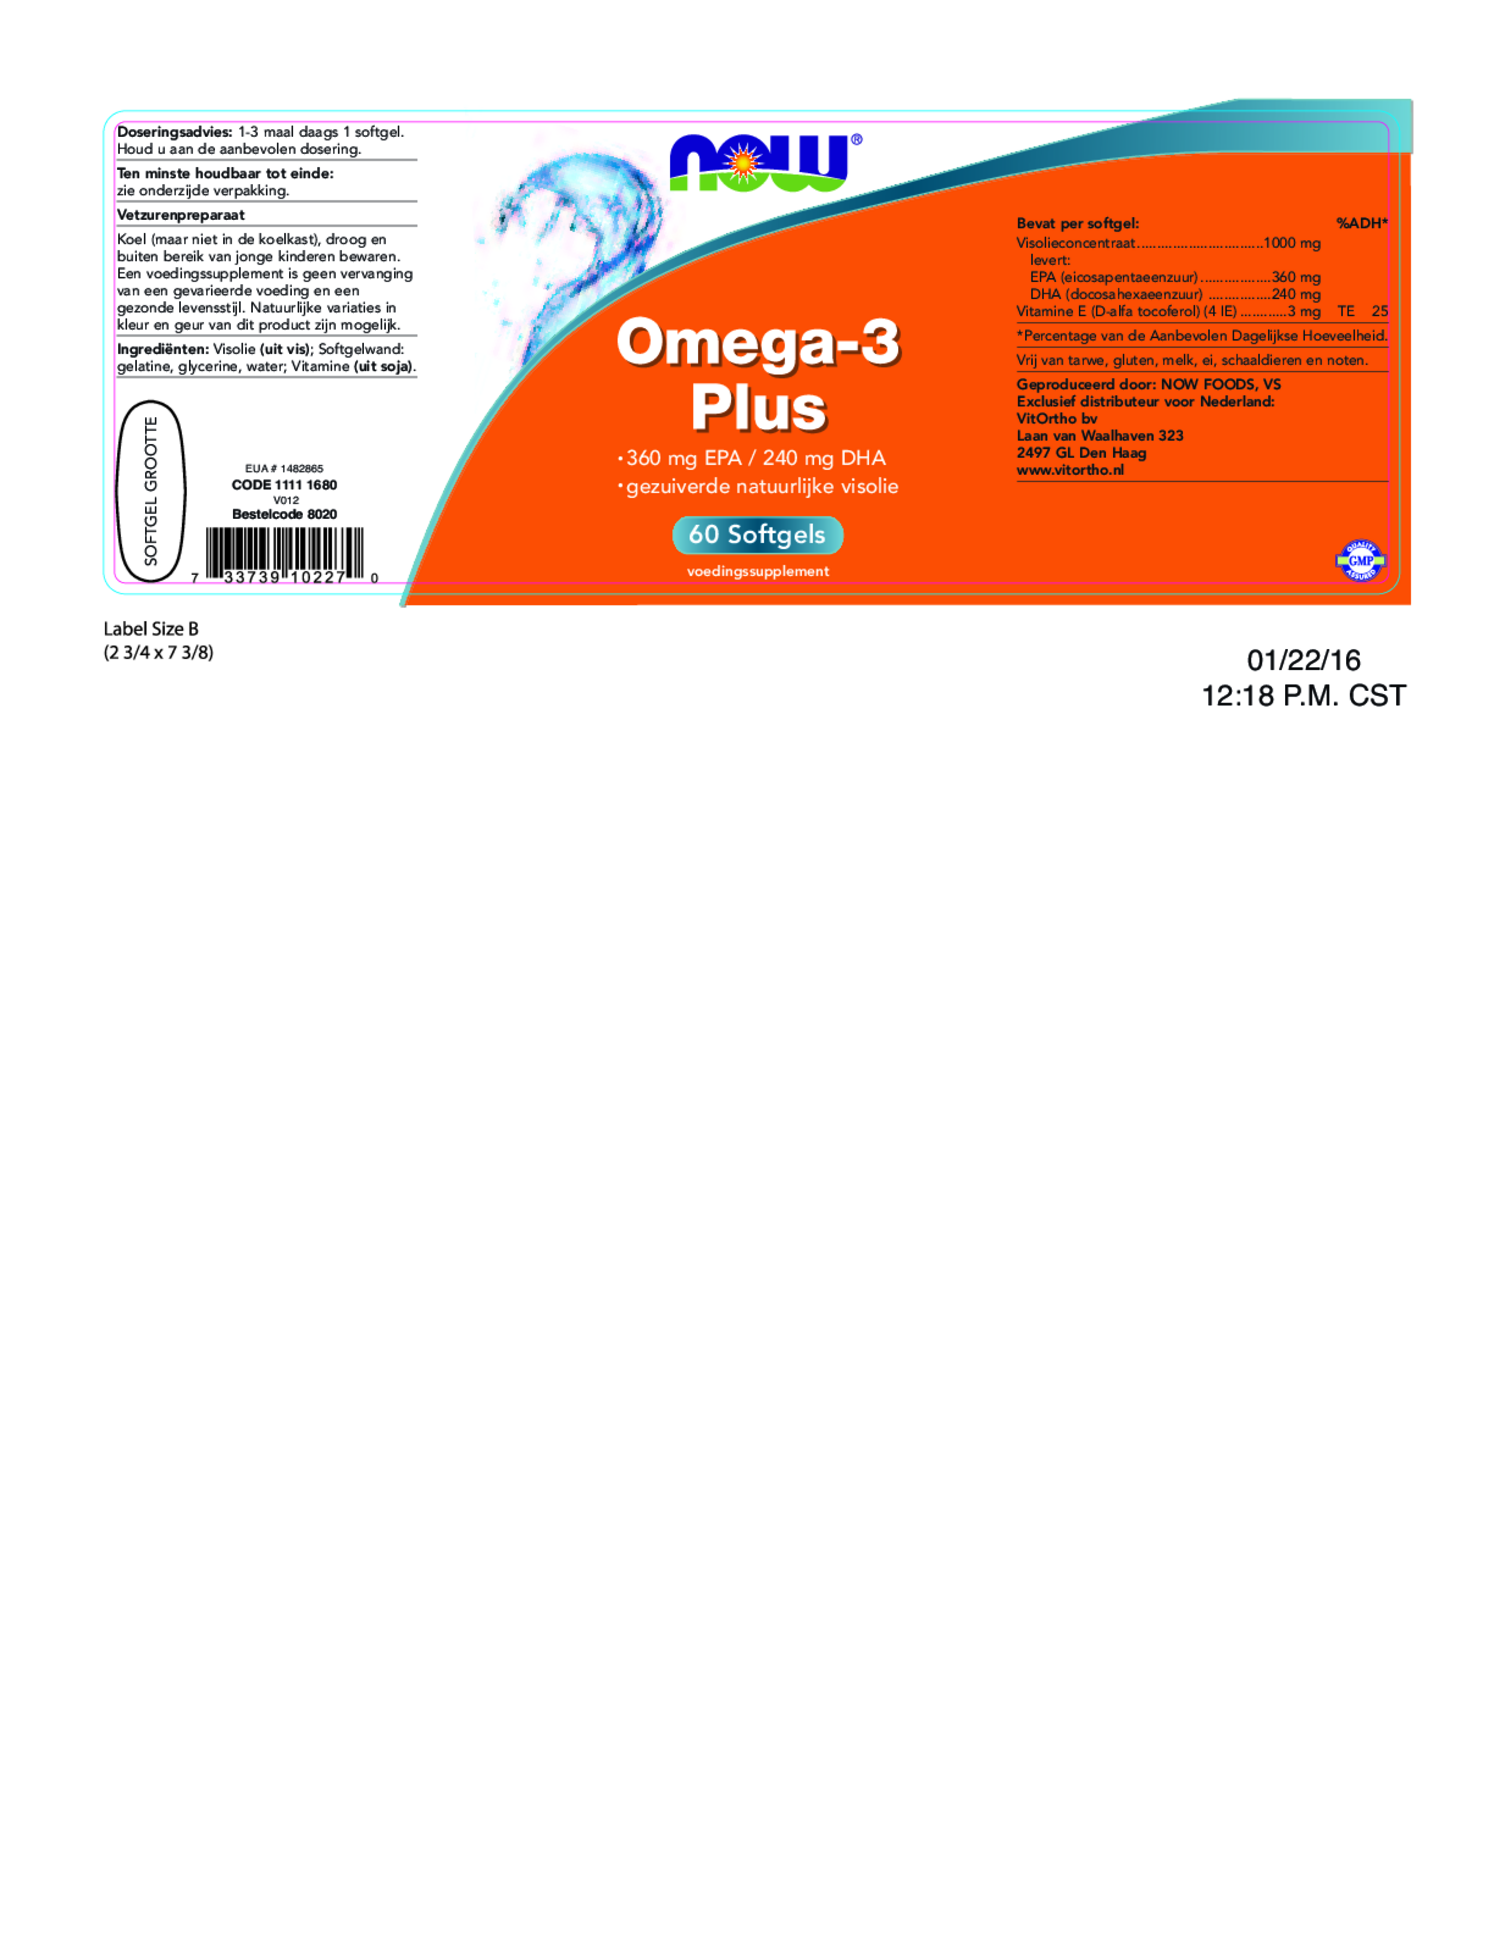 Omega-3 Plus Softgels afbeelding van document #1, etiket